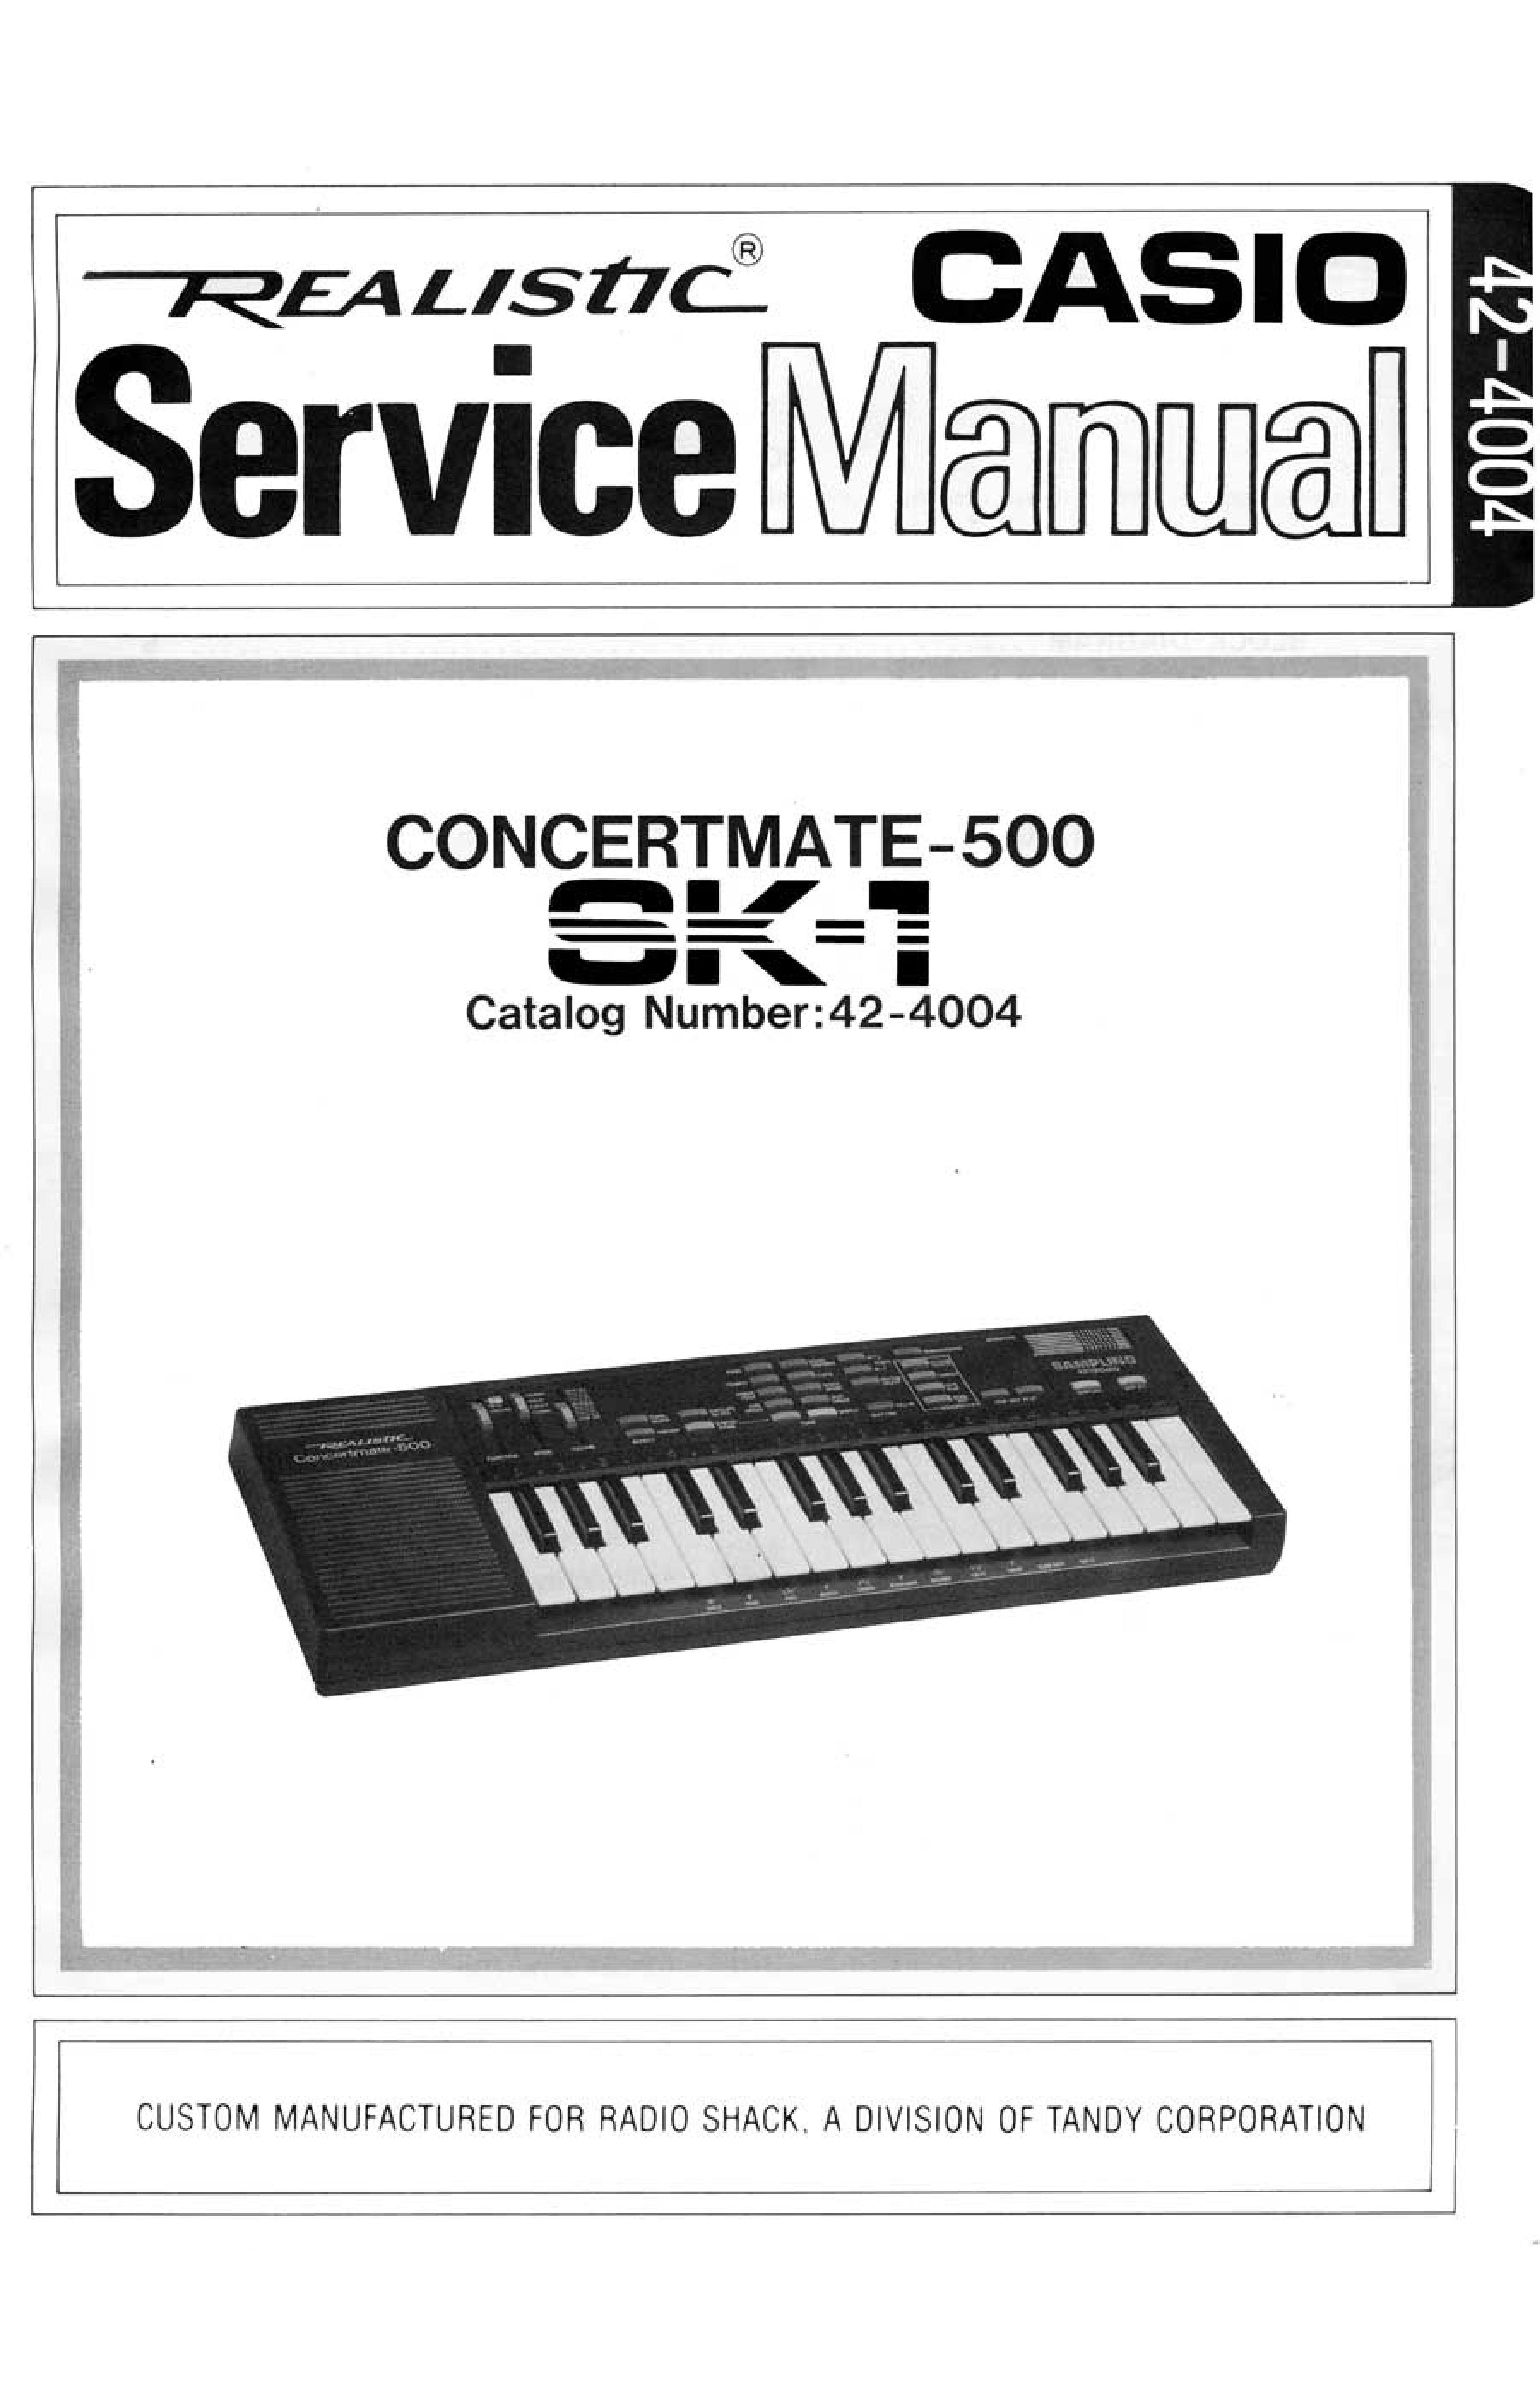 CASIO SK1 - Owner's Manual Immediate Download